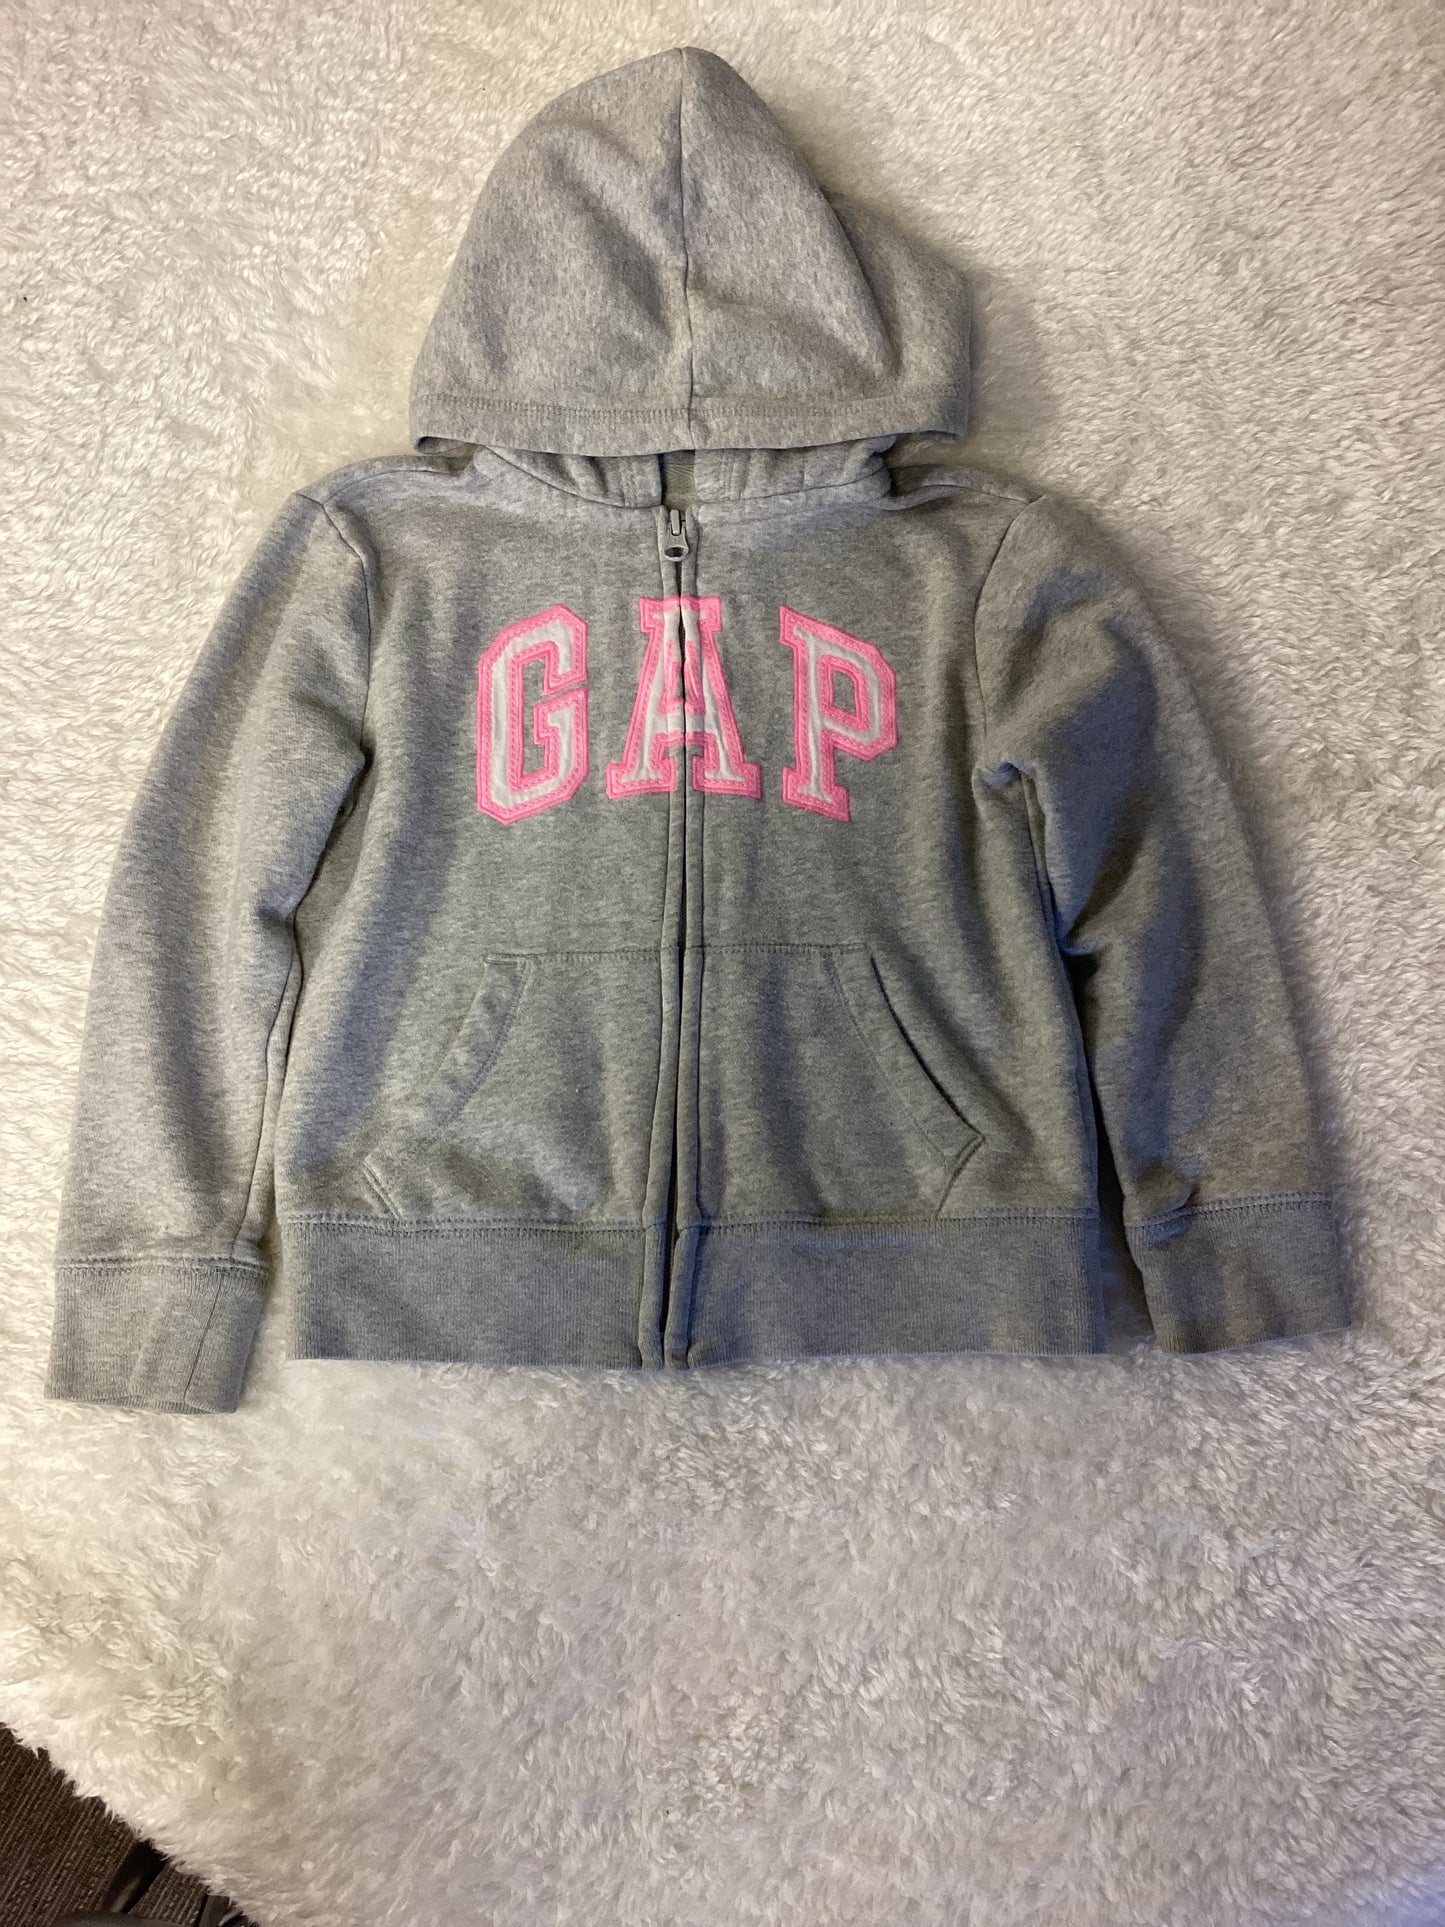 Gap Sweatshirt Youth size 6-7